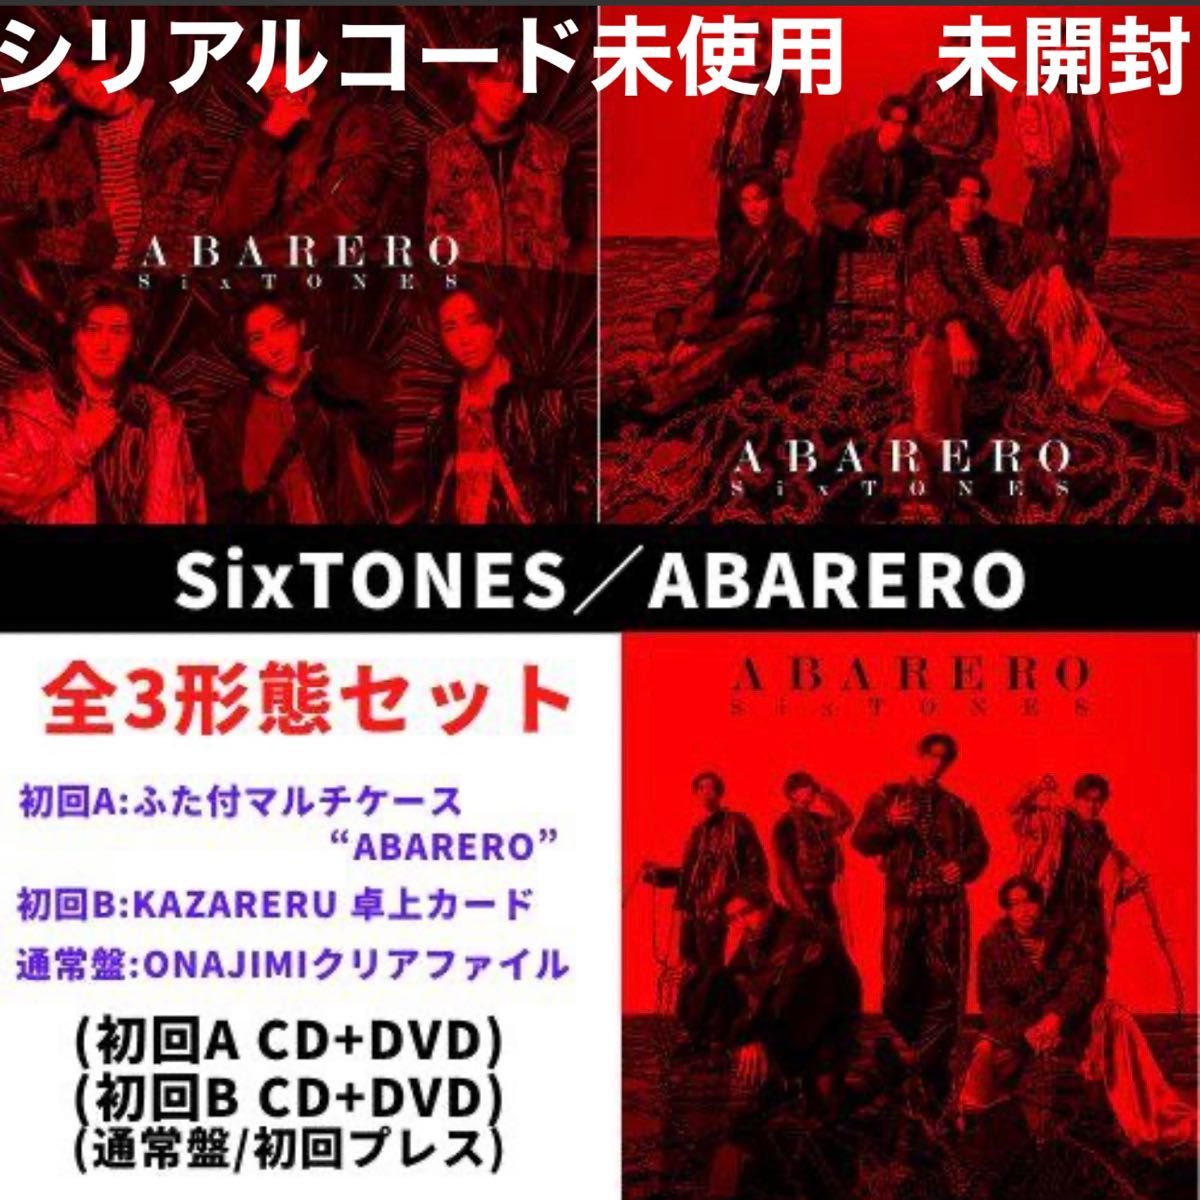 SixTONES ABARERO 初回盤A＋初回盤B＋通常盤セット ふた付マルチケース